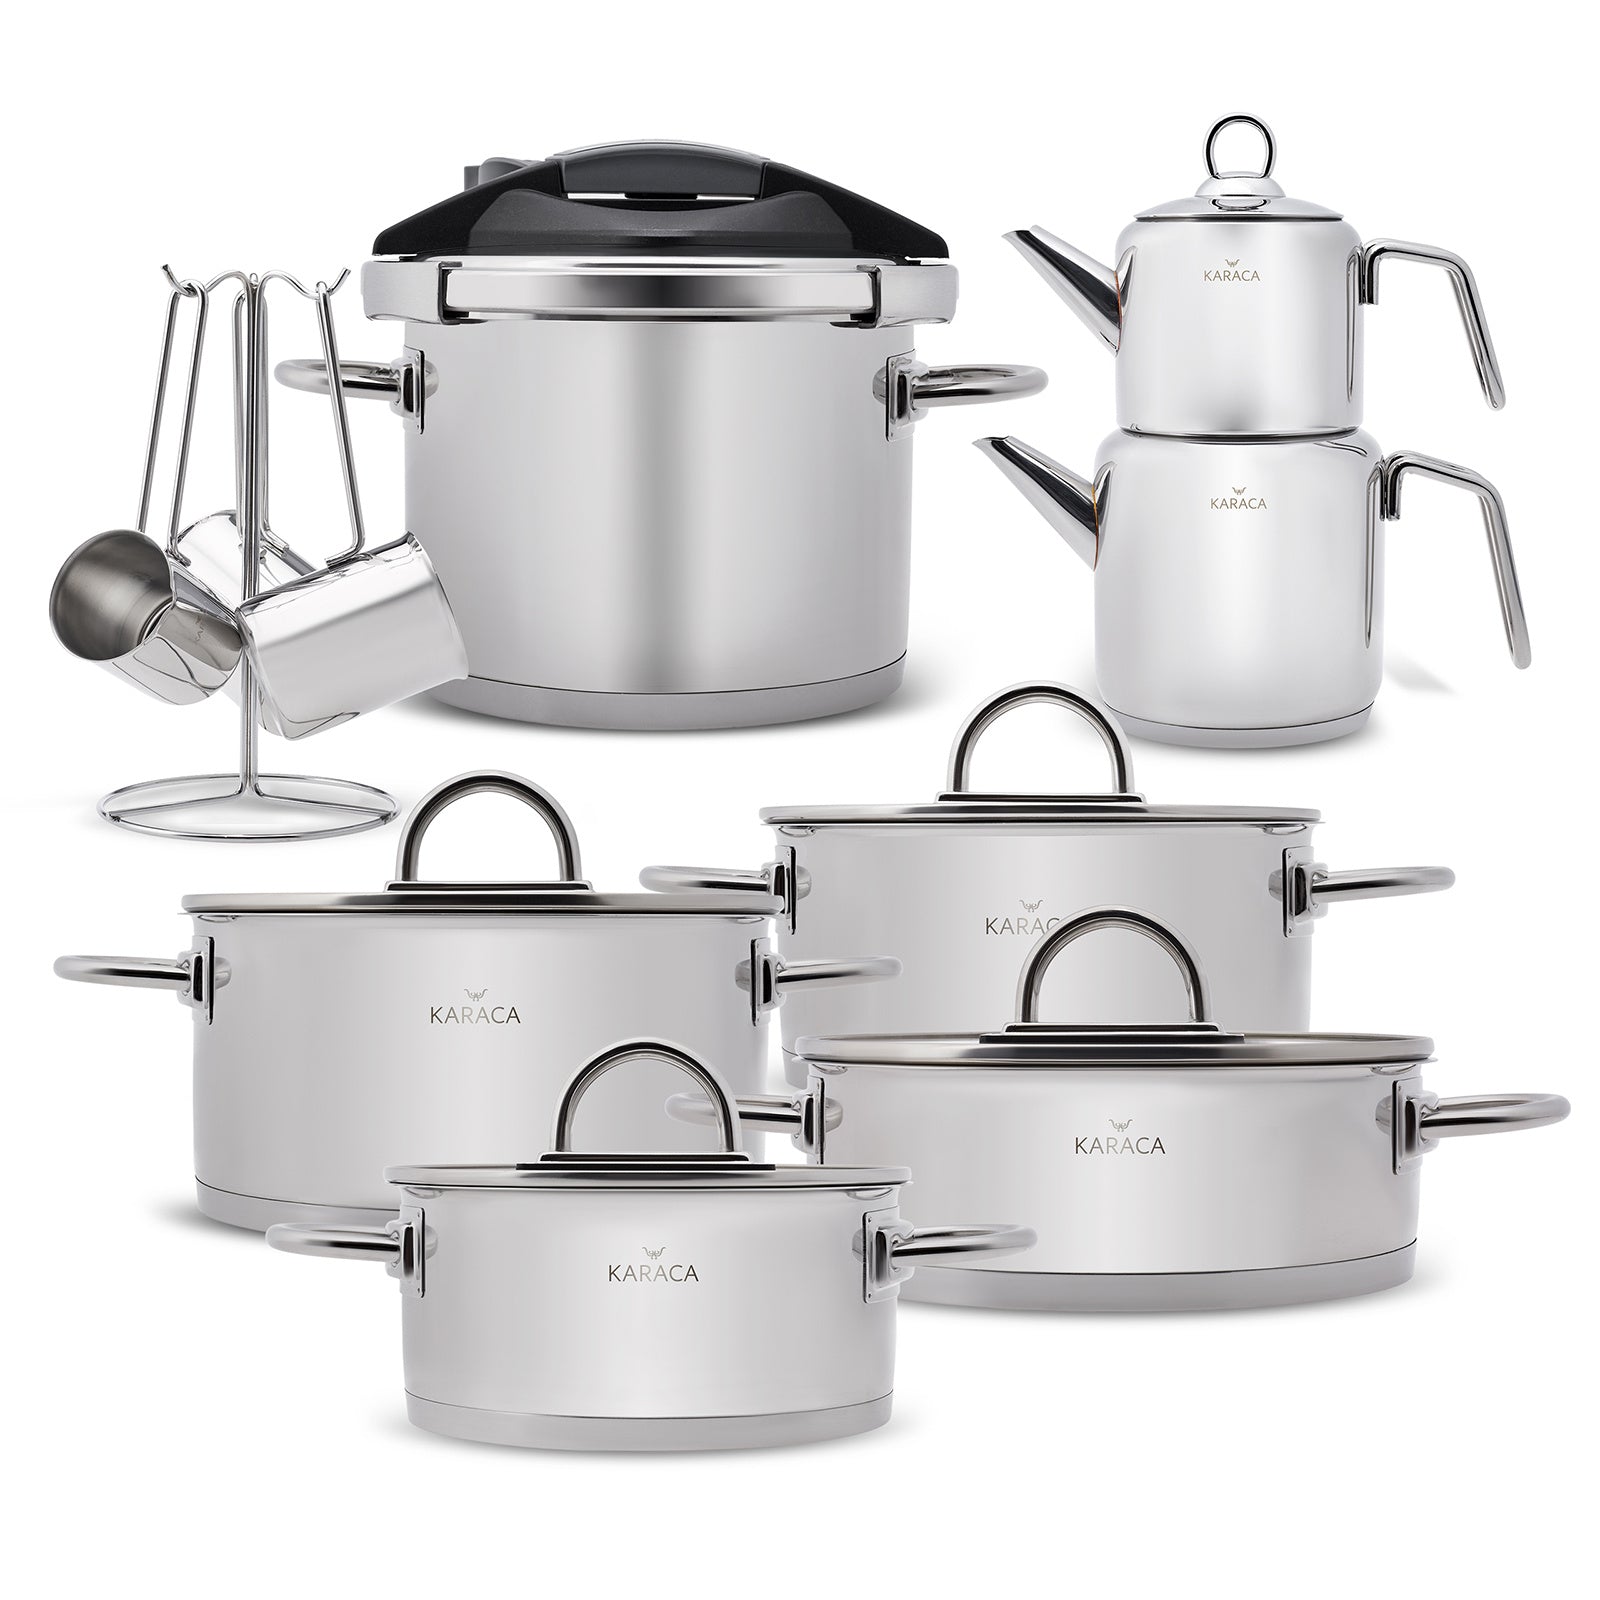 Karaca Platinum Stainless Steel 17 Pieces Wedding Cookware Set